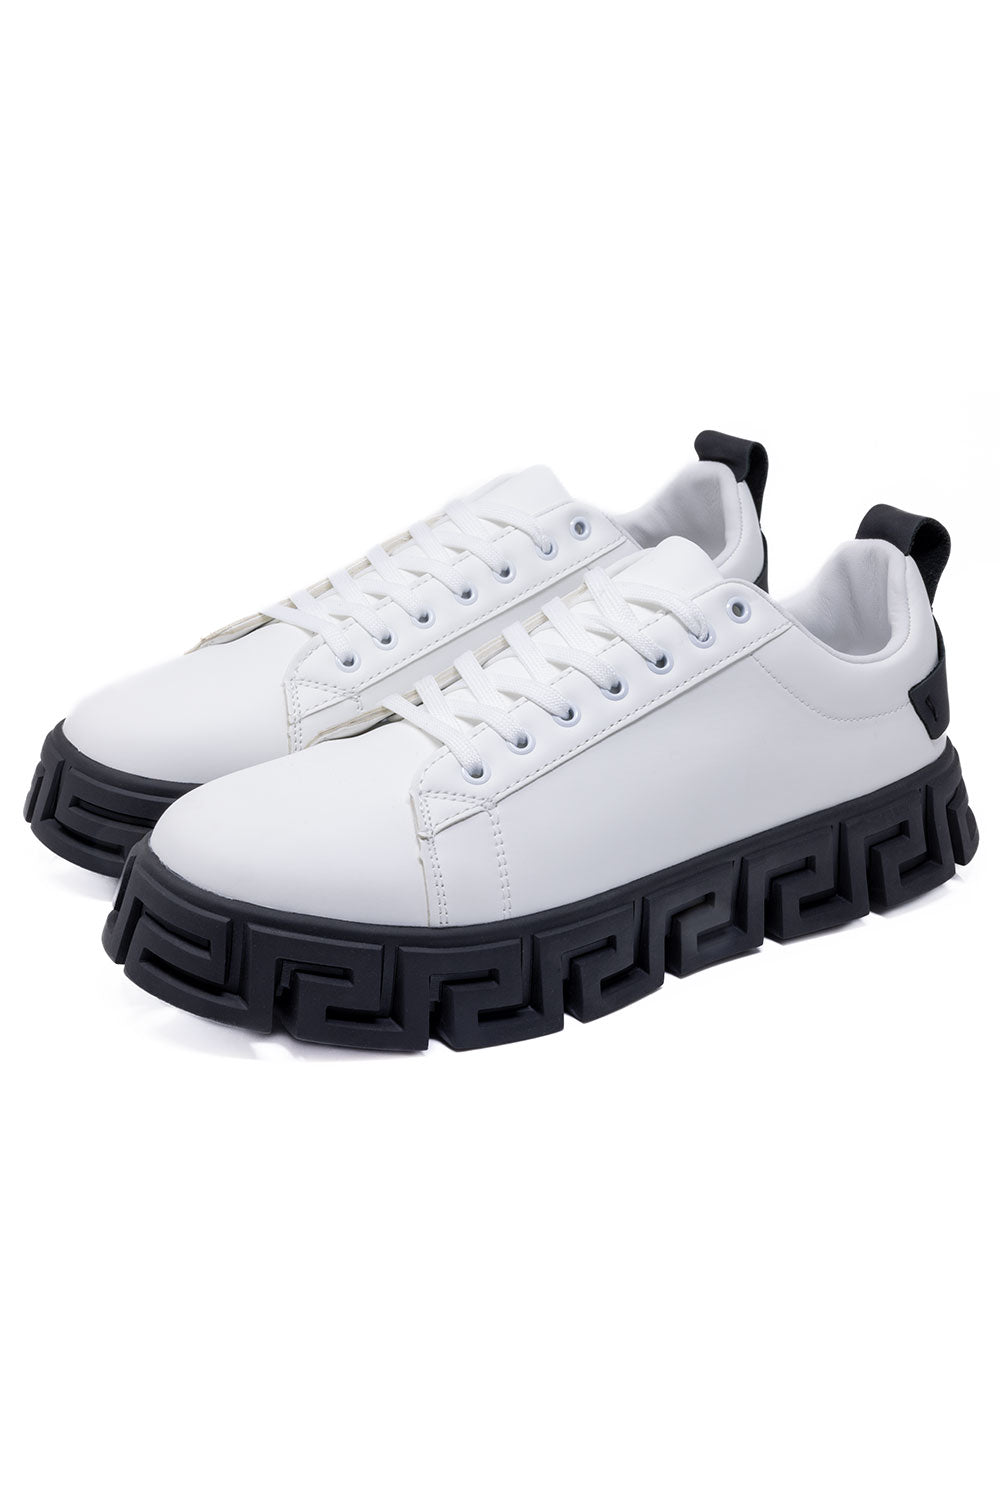 Barabas Men's Wholesale  Greek Key Sole Pattern Premium Sneakers 4SK06 White Black